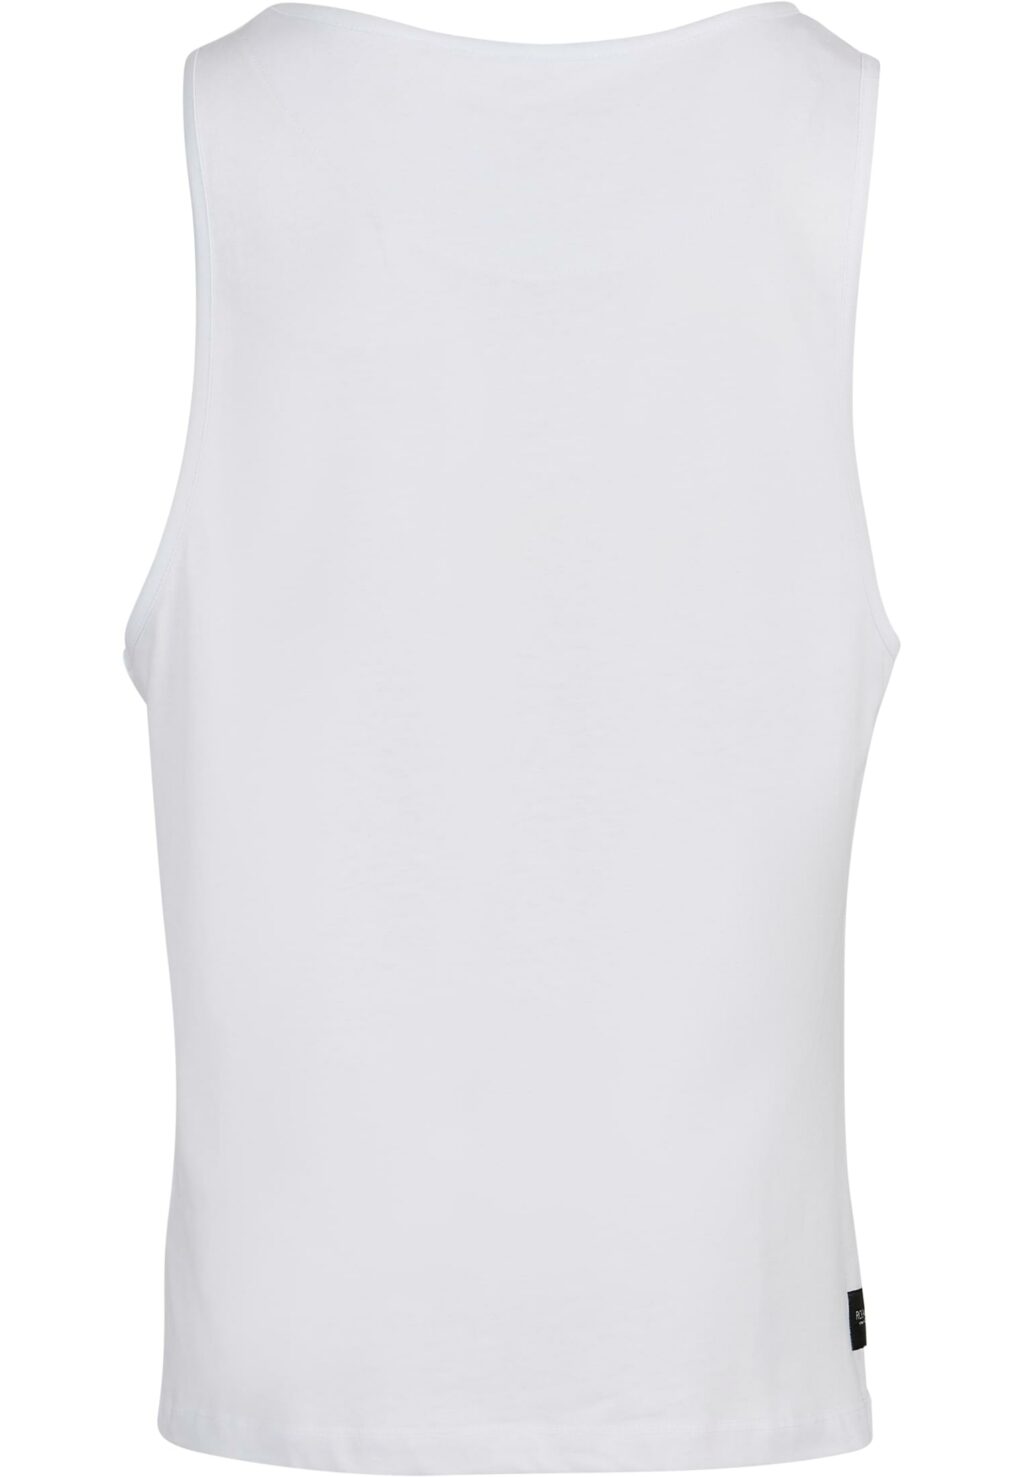 Rocawear as Tanktop white RWTT014